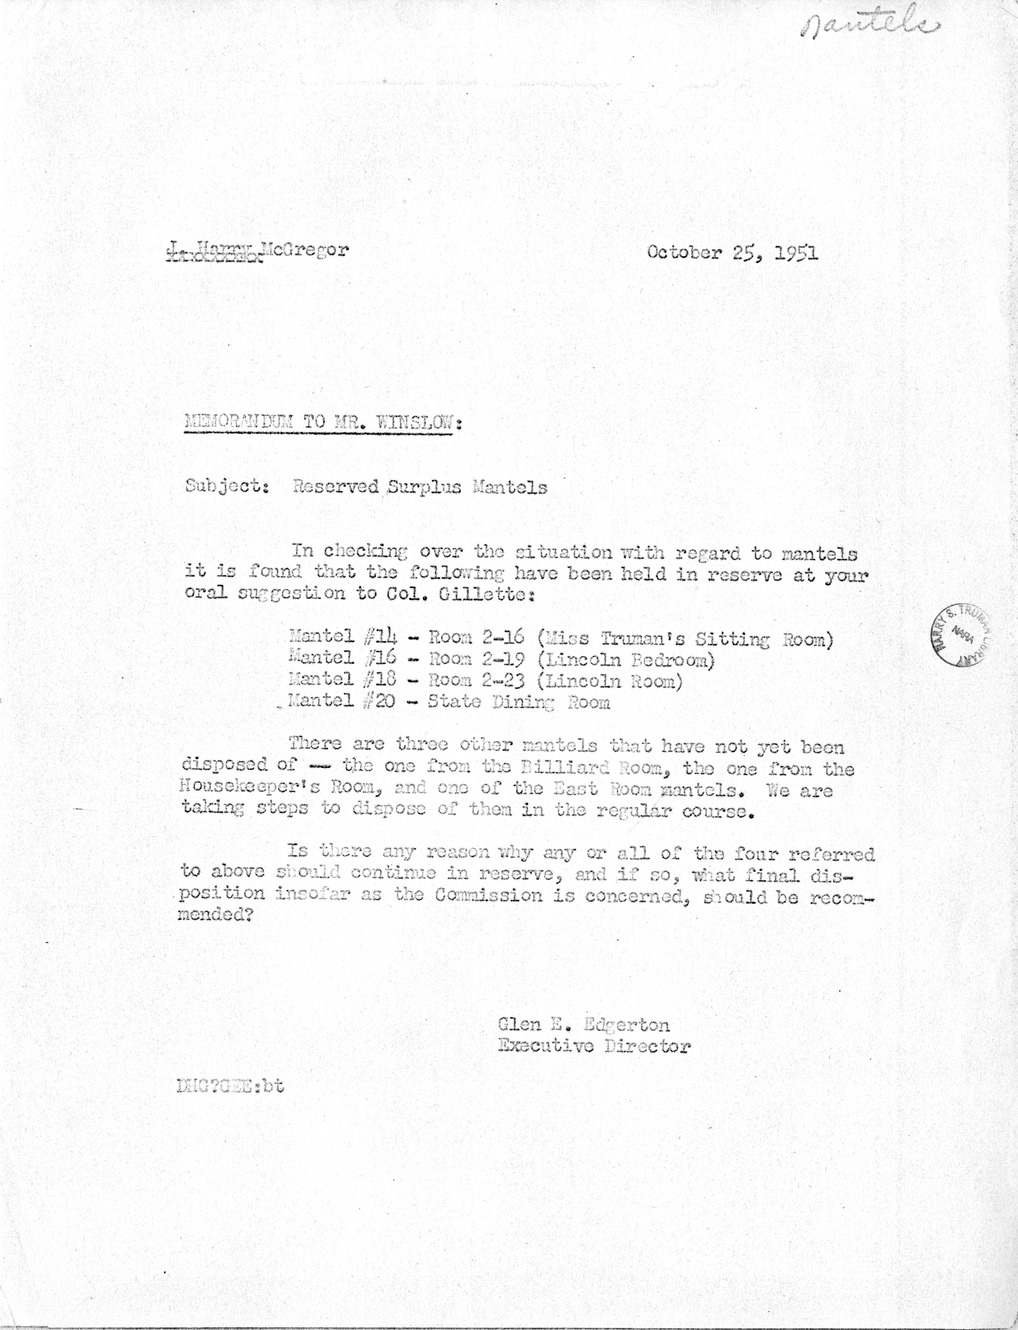 Memorandum from Major General Glen E. Edgerton to Mr. Lorenzo Winslow